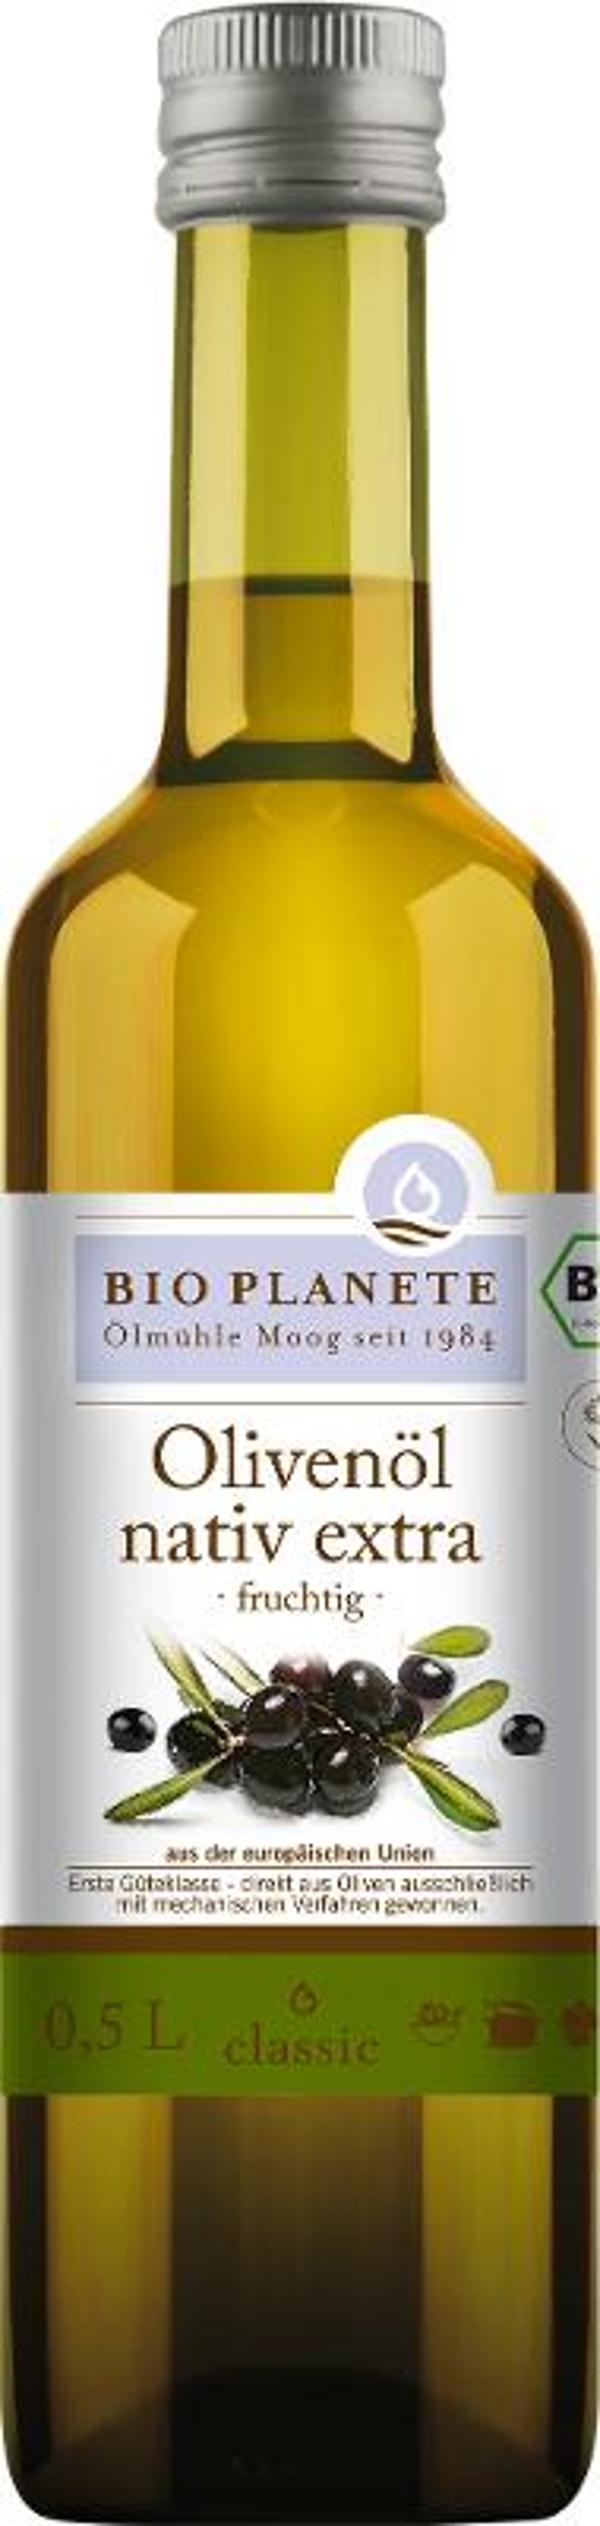 Produktfoto zu Olivenöl fruchtig 0,5 l